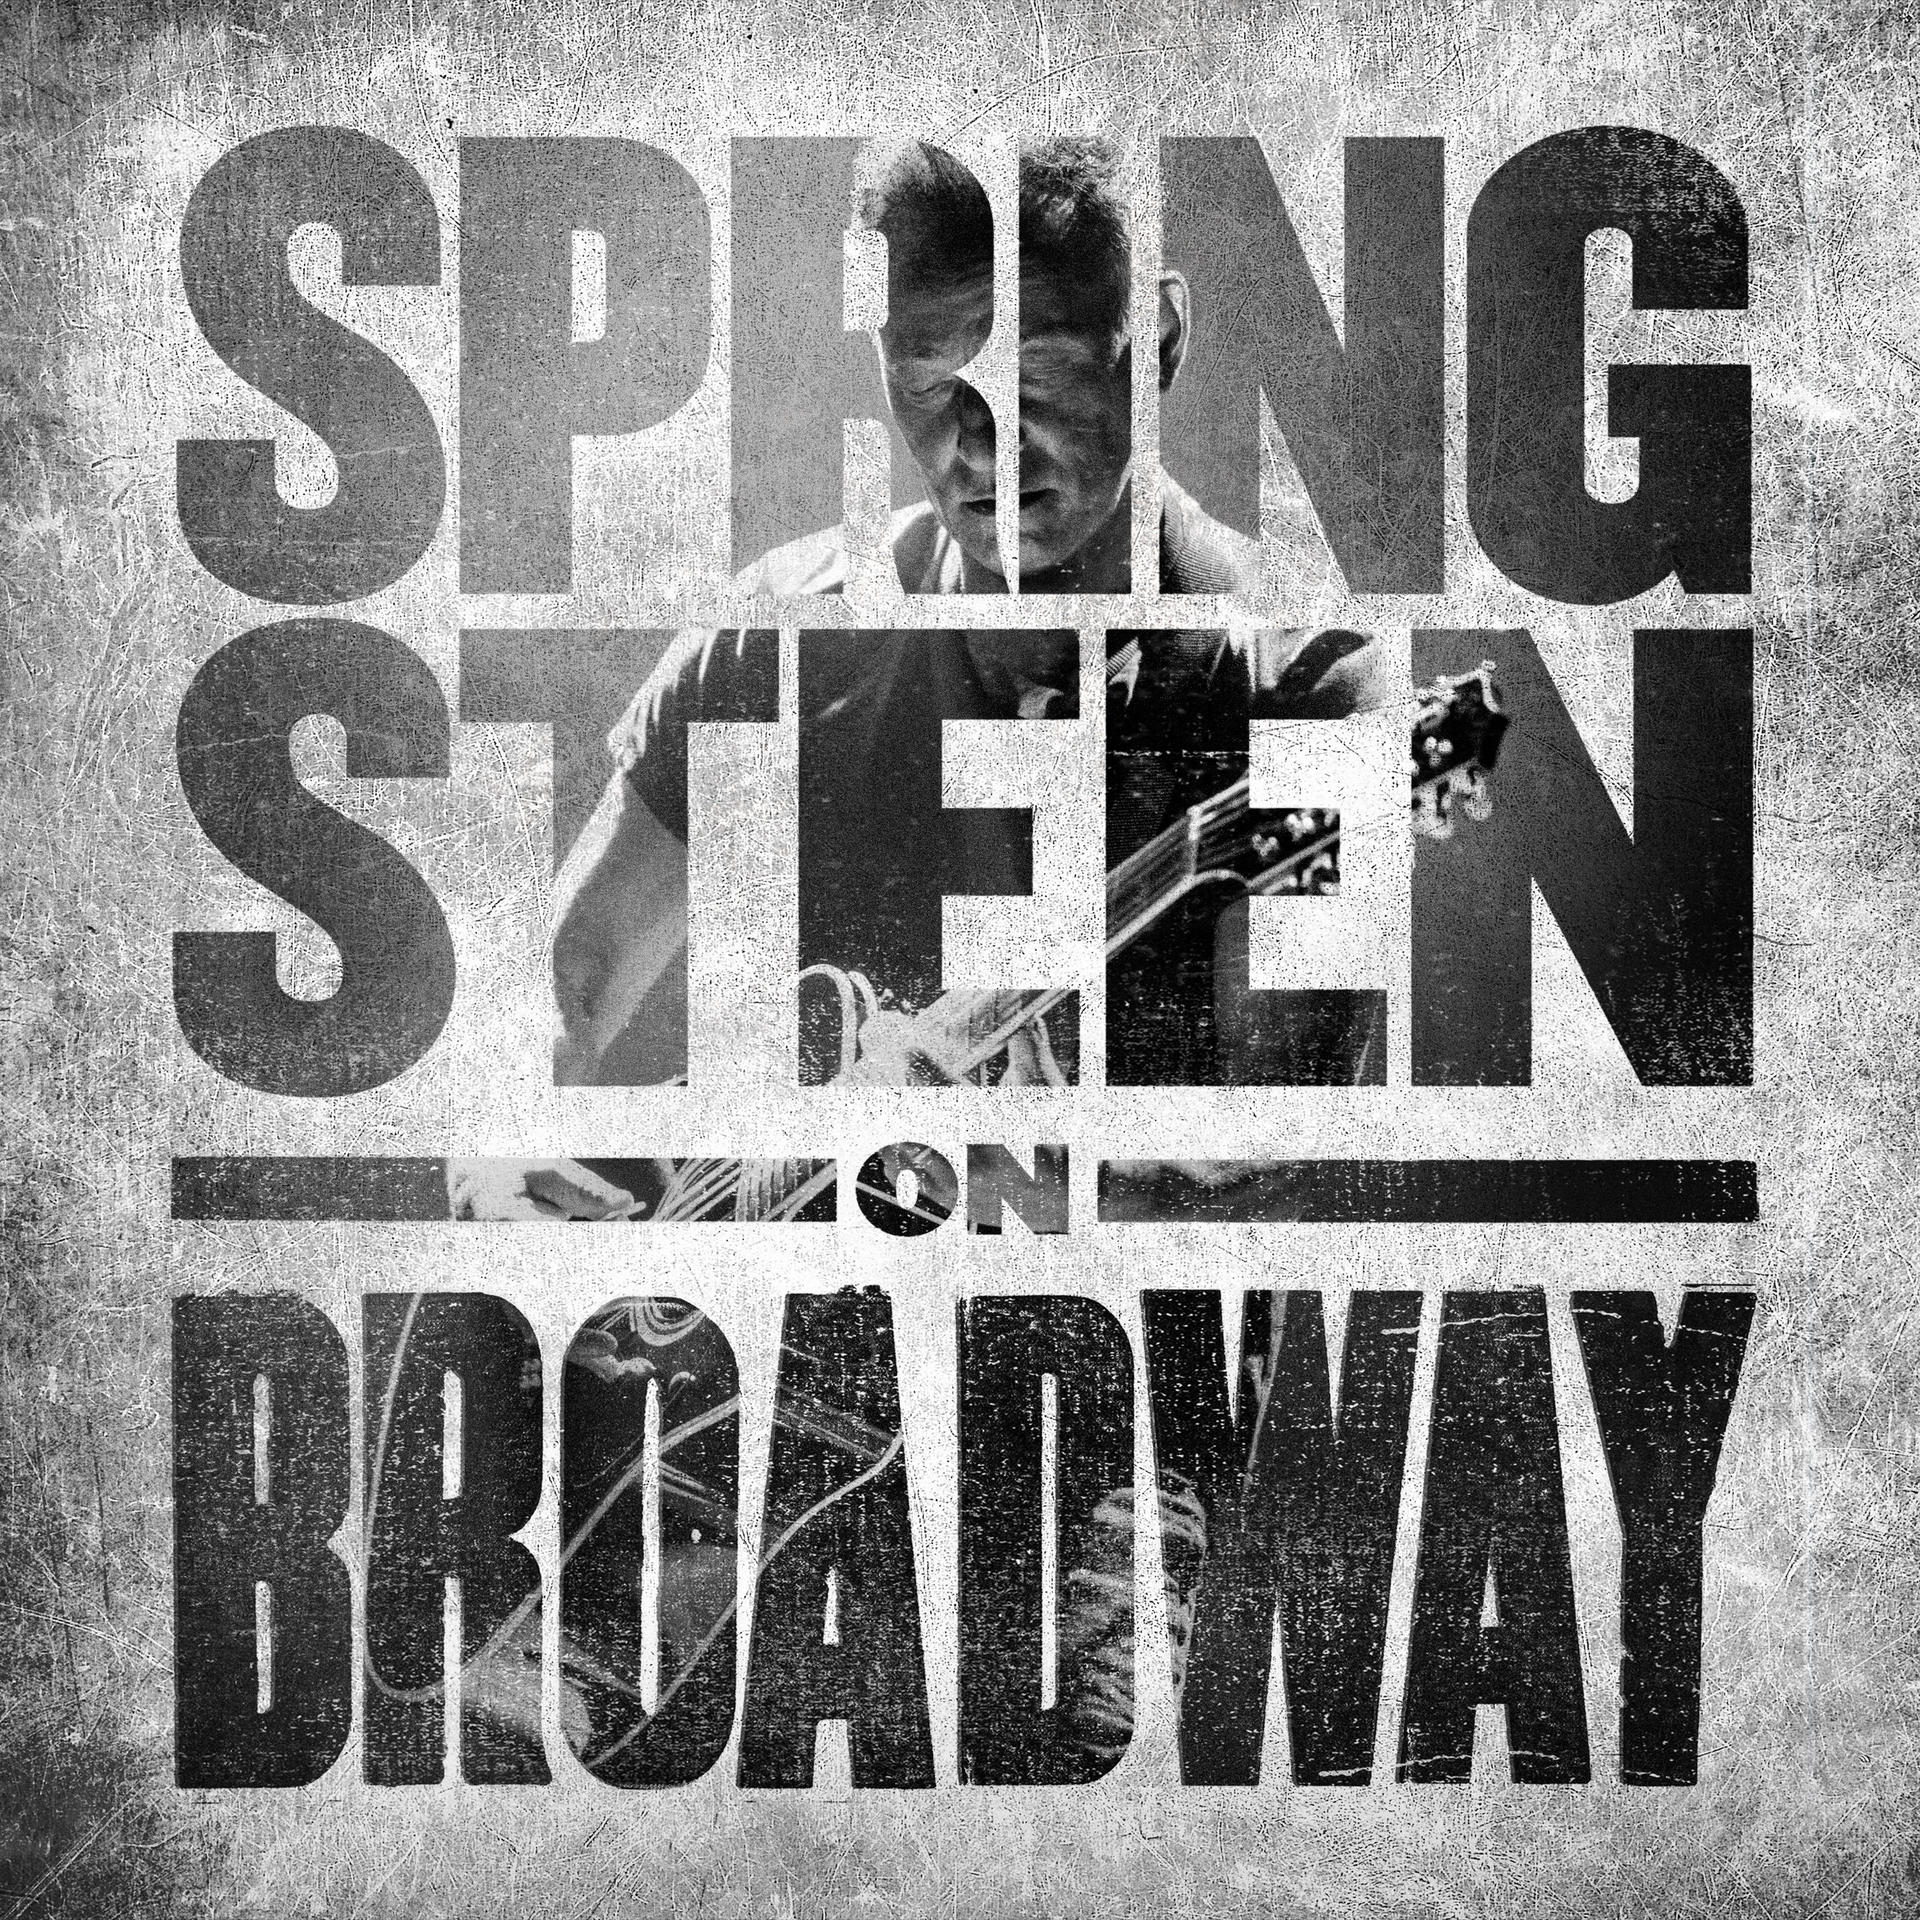 Broadway Springsteen (CD) Bruce Springsteen - - on